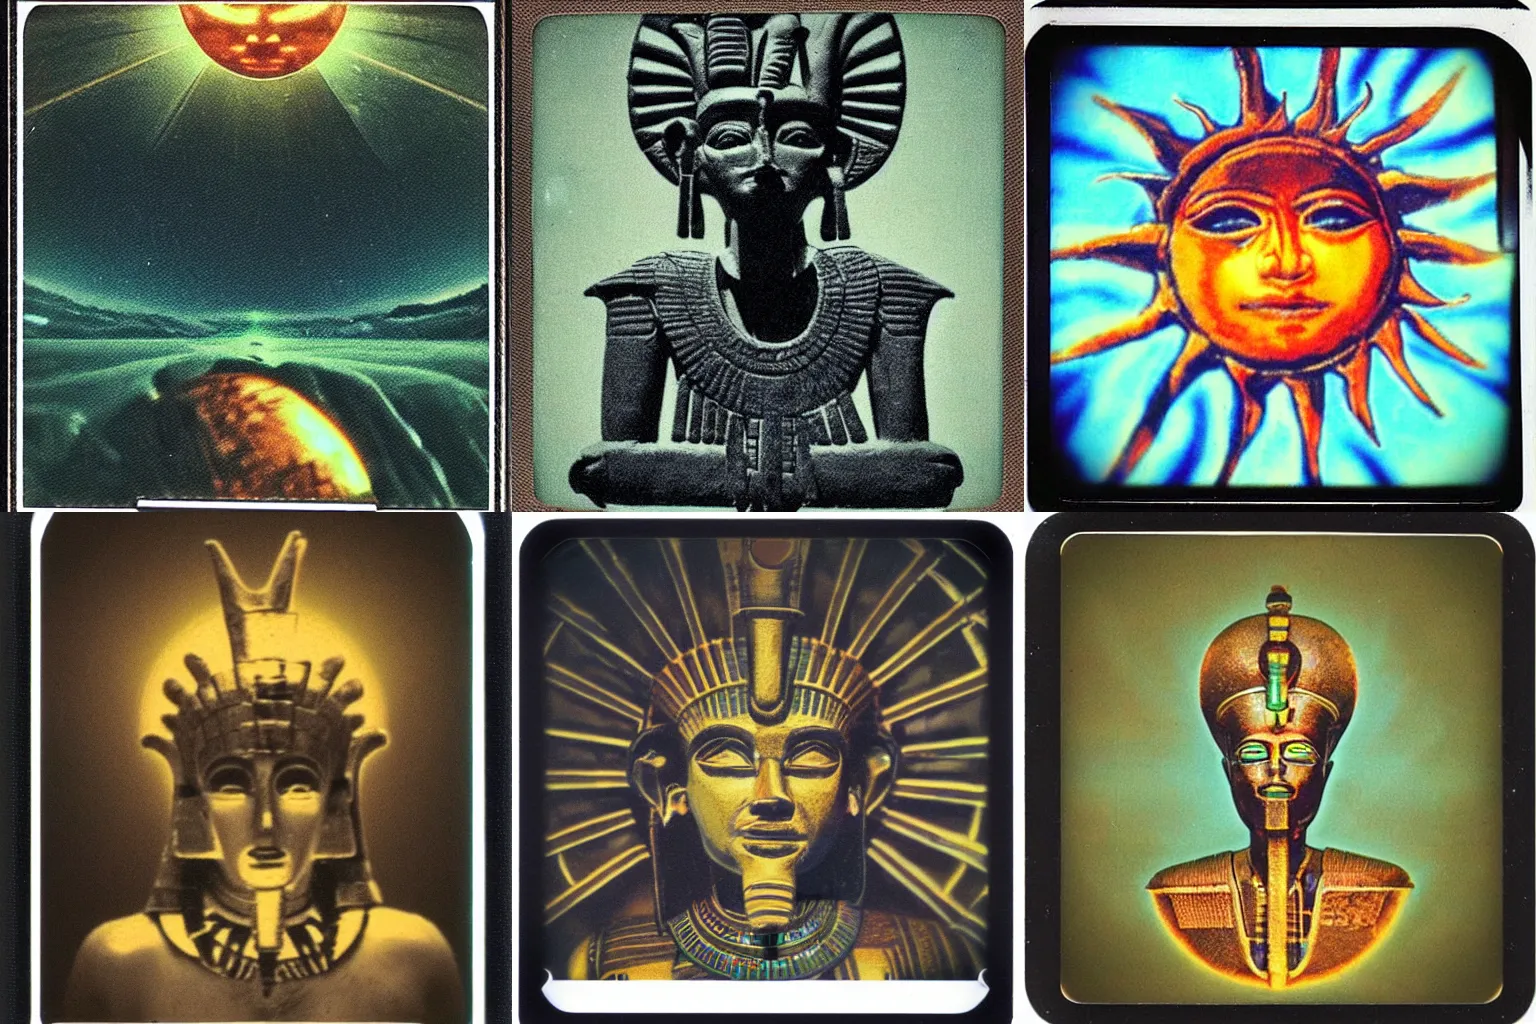 Prompt: “photorealistic Polaroid of the Sun god Ra”